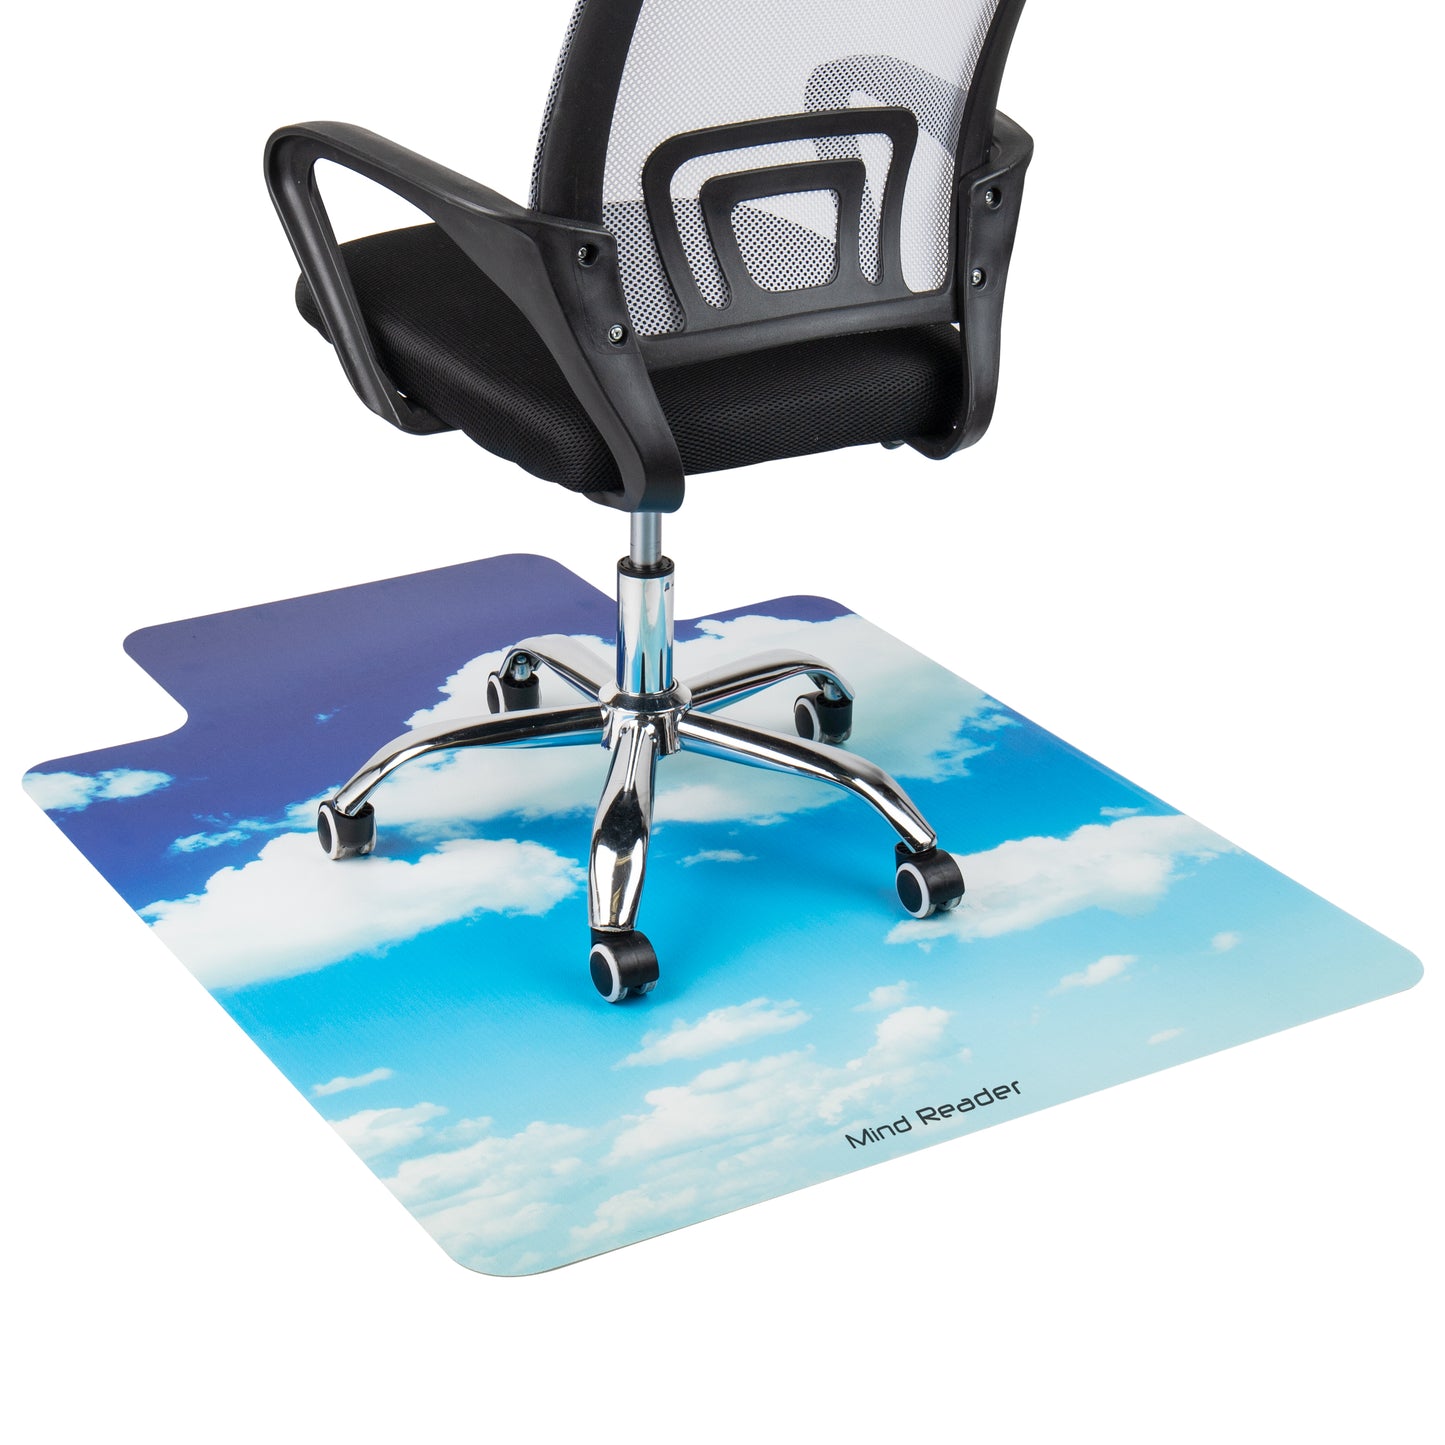 Mind Reader Office Chair Mat for Hardwood Floors, Under Desk Floor Protector, Polycarbonate, 47.25"L x 35.5"W x 0.125"H, Blue